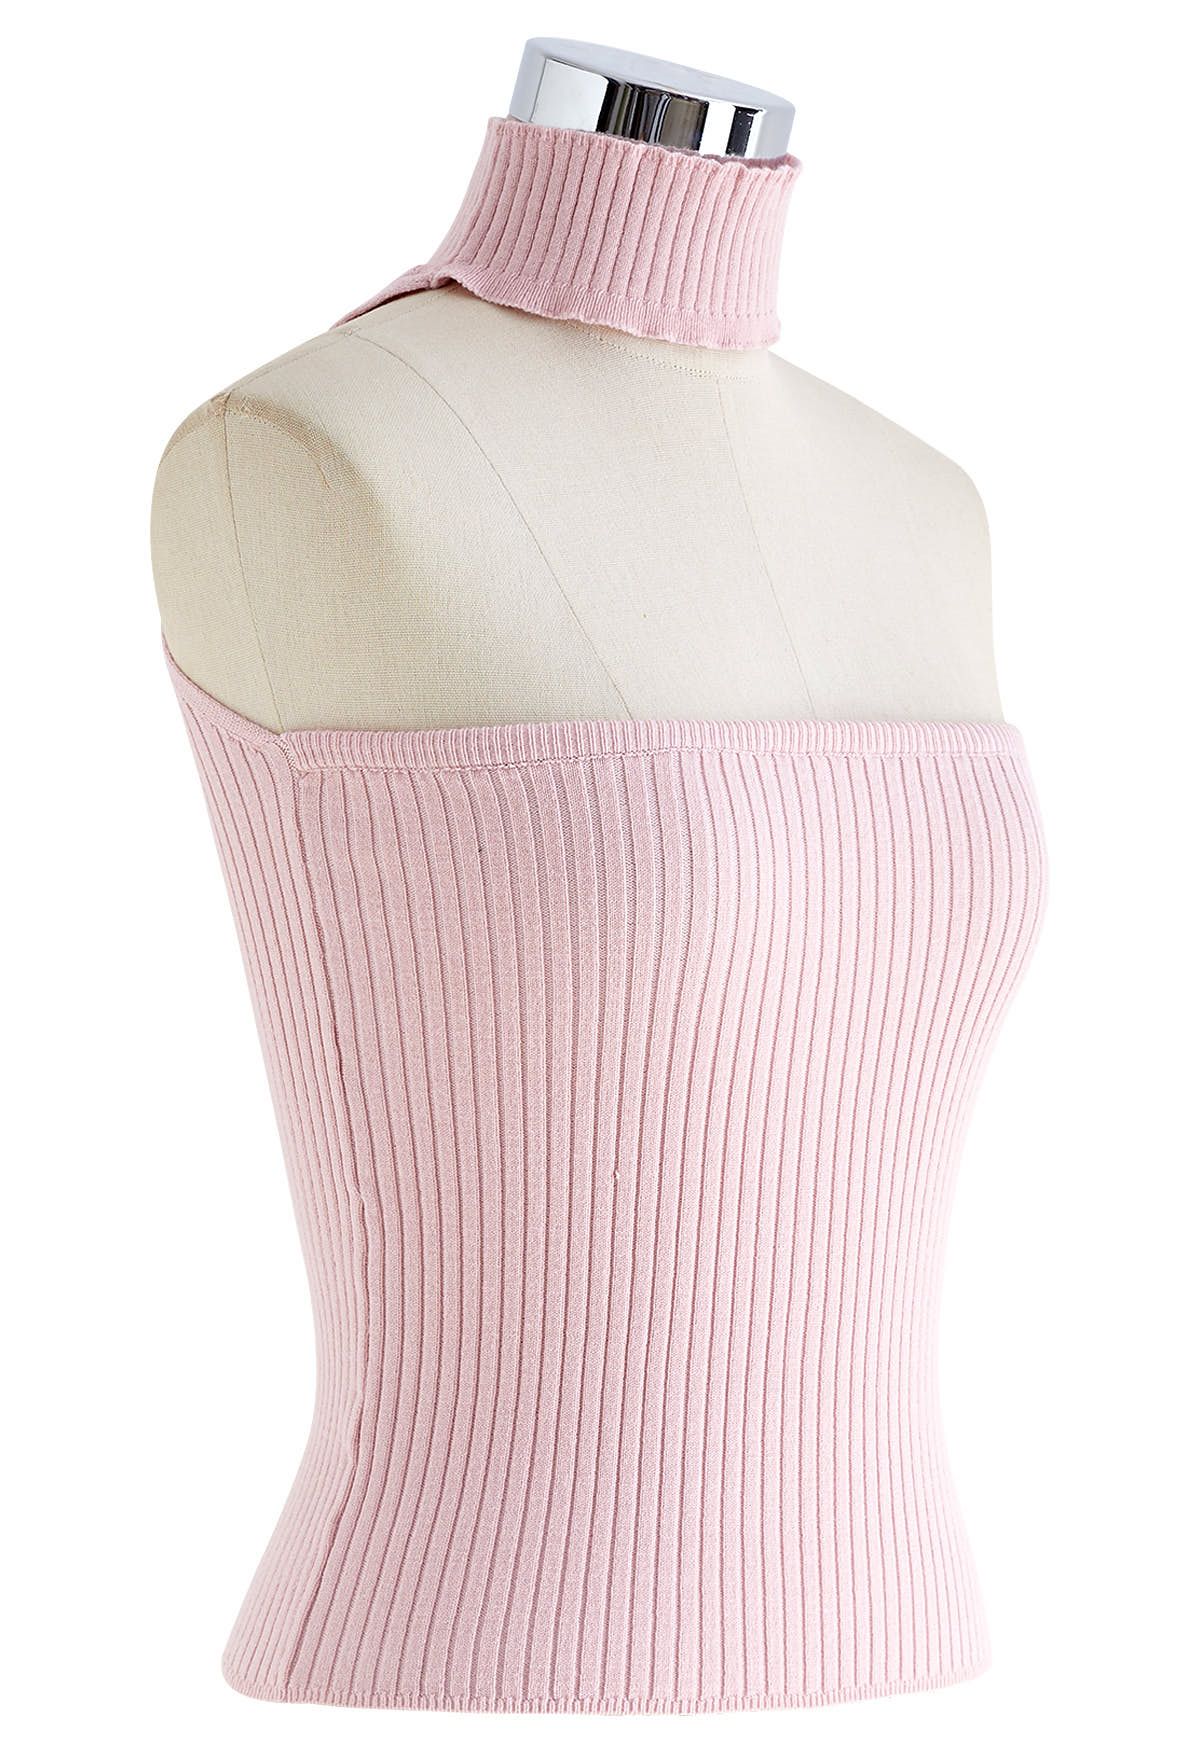 Strapless Halter Neck Knit Top in Pink